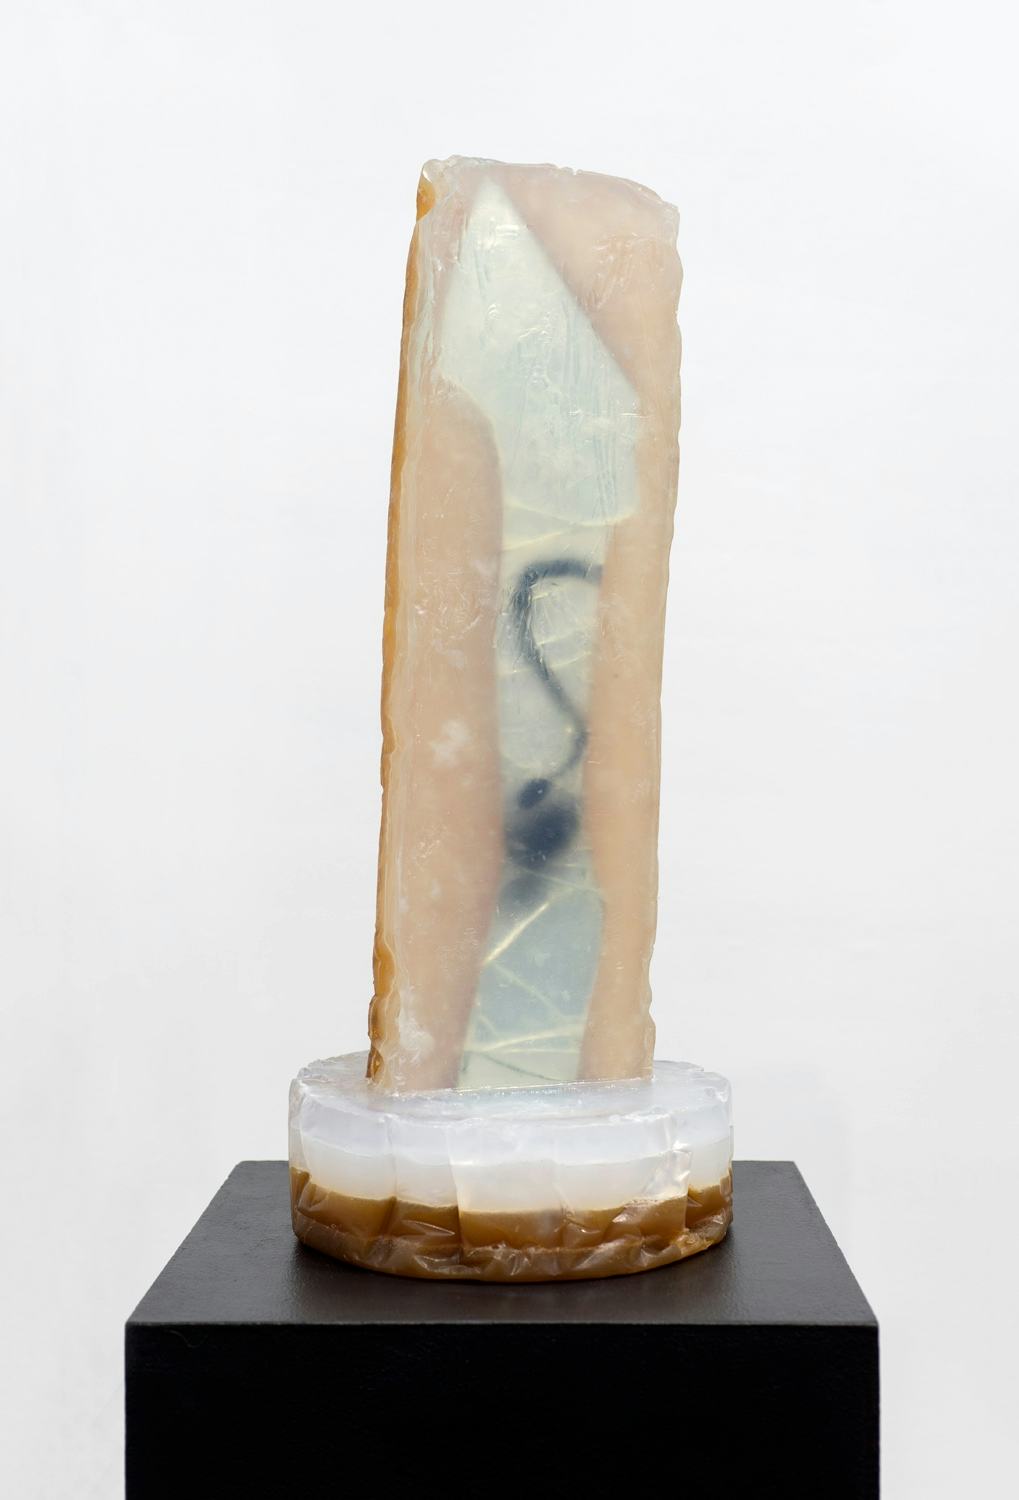 Bri Williams – Sword in Stone (2018). Soap, mirror shard, suede thread. 25h x 10w x 10d inches